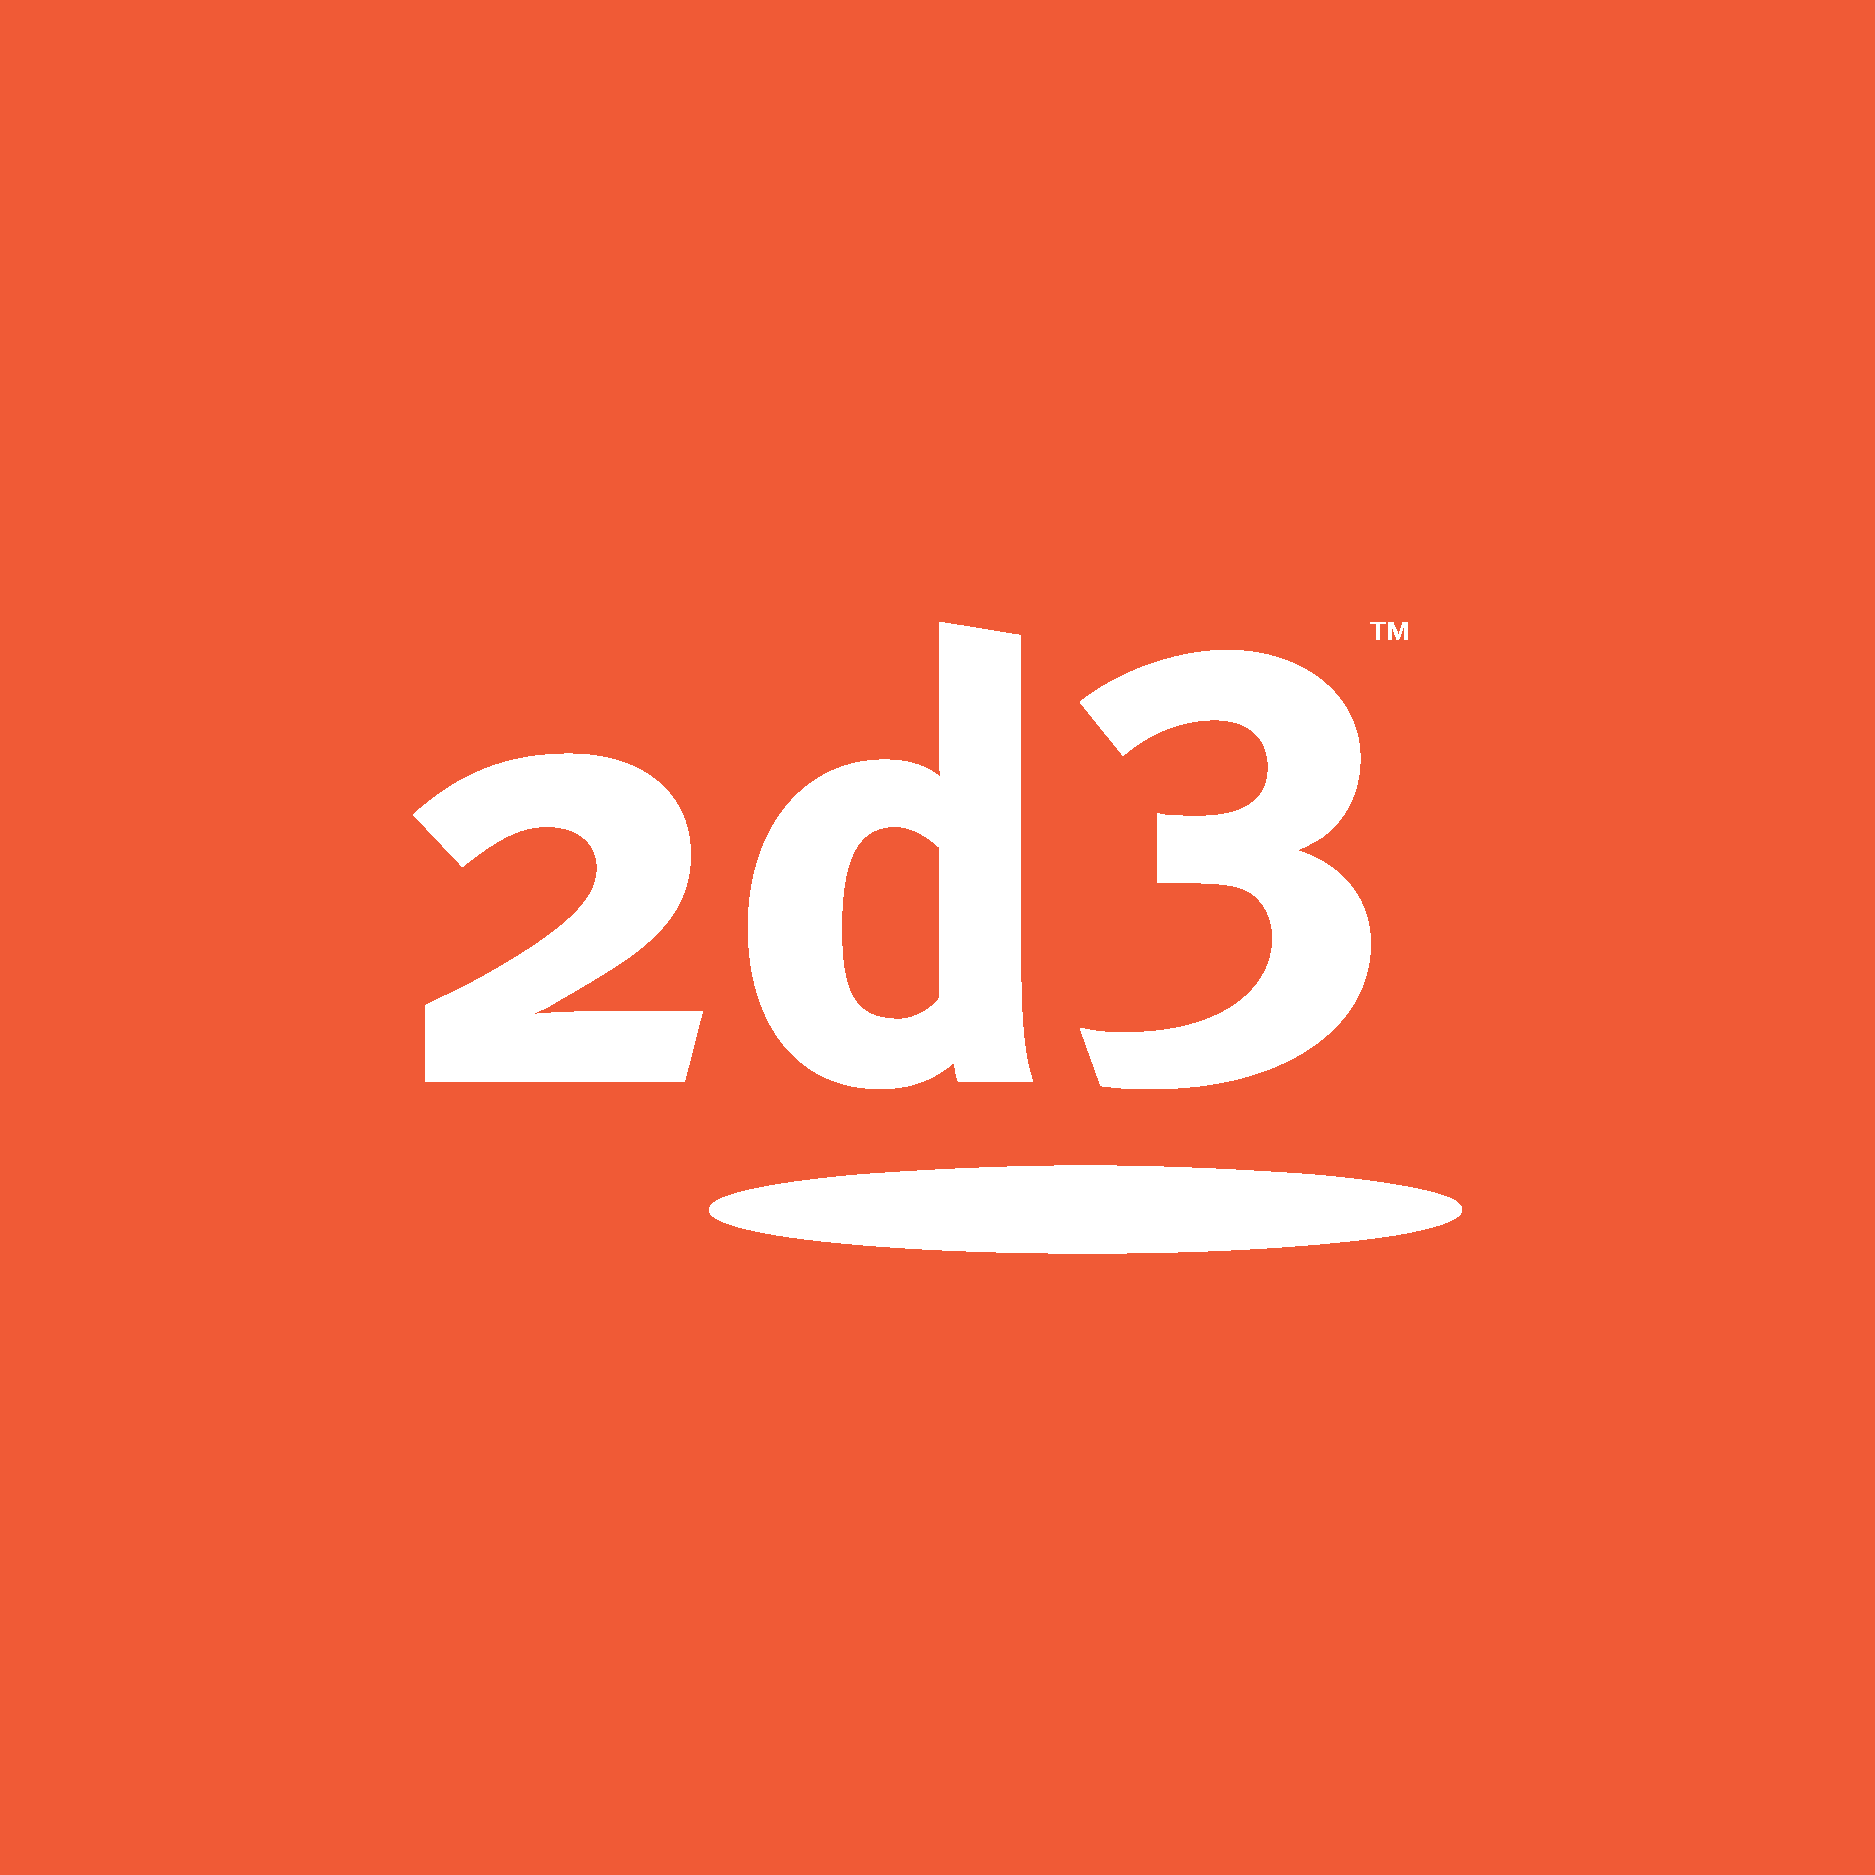 2d3 Logo Vector